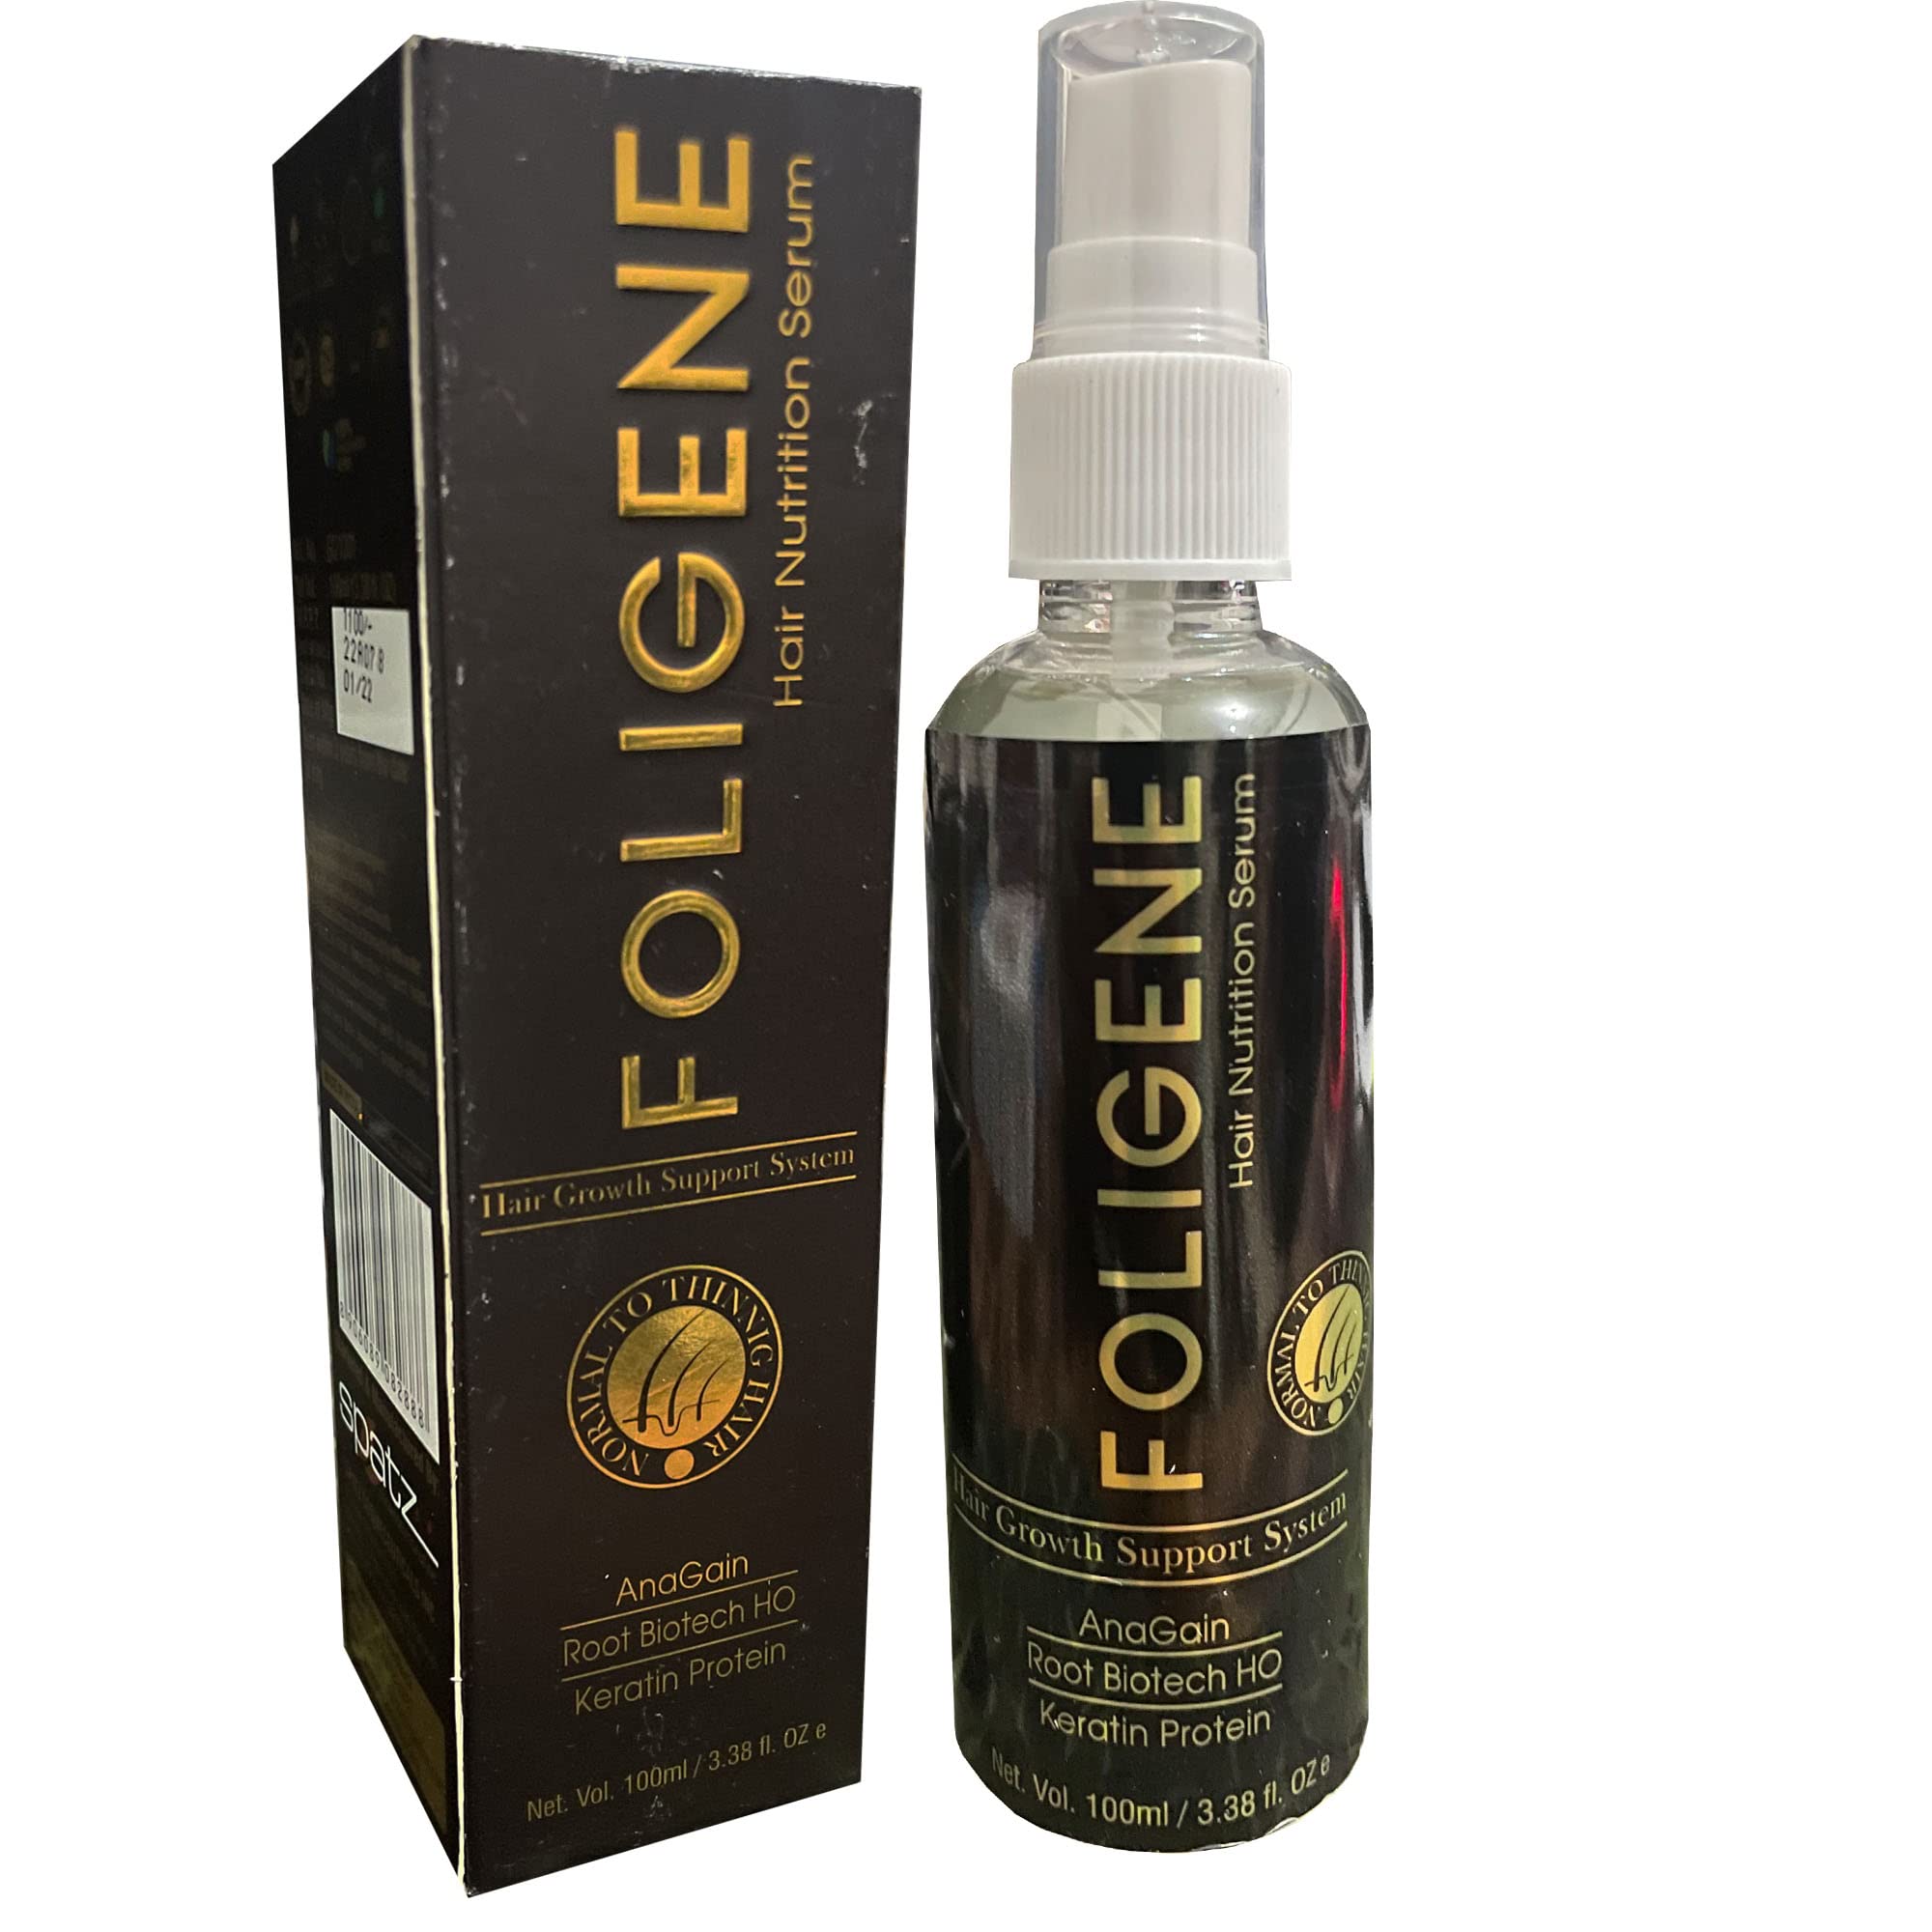 Rotex Foligene Hair Nutrition Serum I Hair Growth Support Systeam I Boosts hair growth, Prevents haih Anagain, Root Biotech HO, Keratin Protein 100 ml